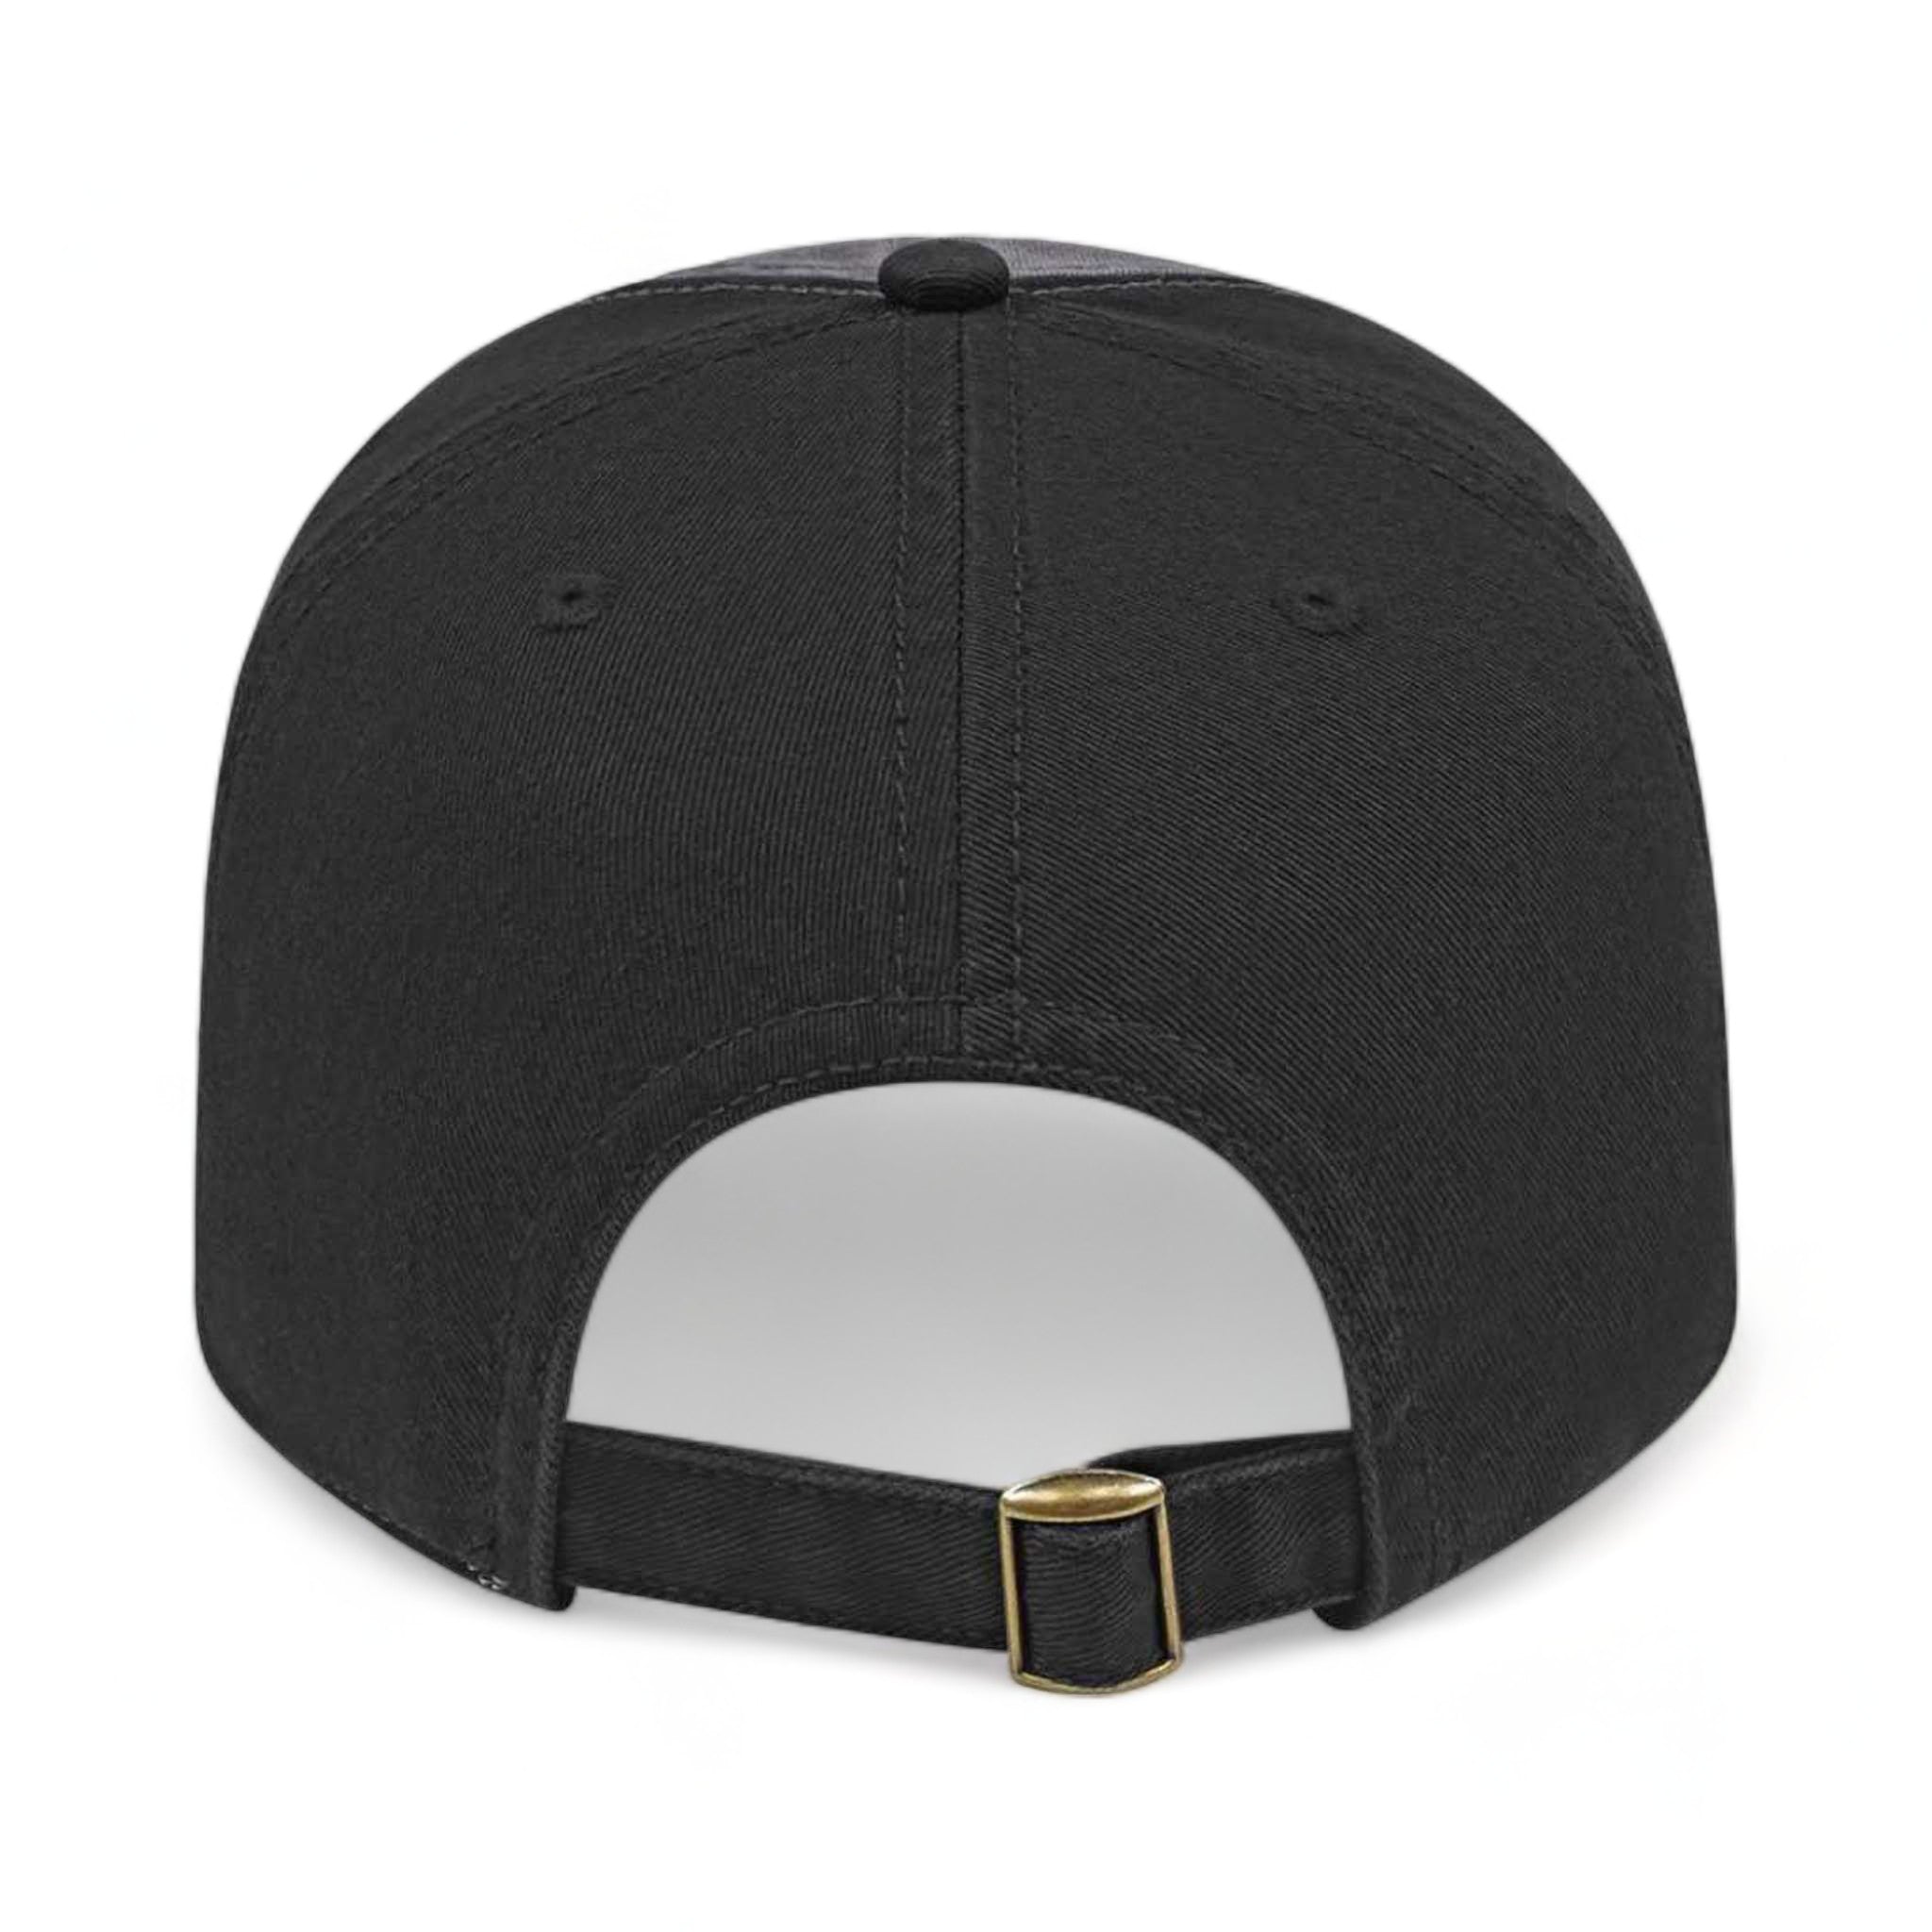 Back view of CAP AMERICA i1002 custom hat in dark grey and black